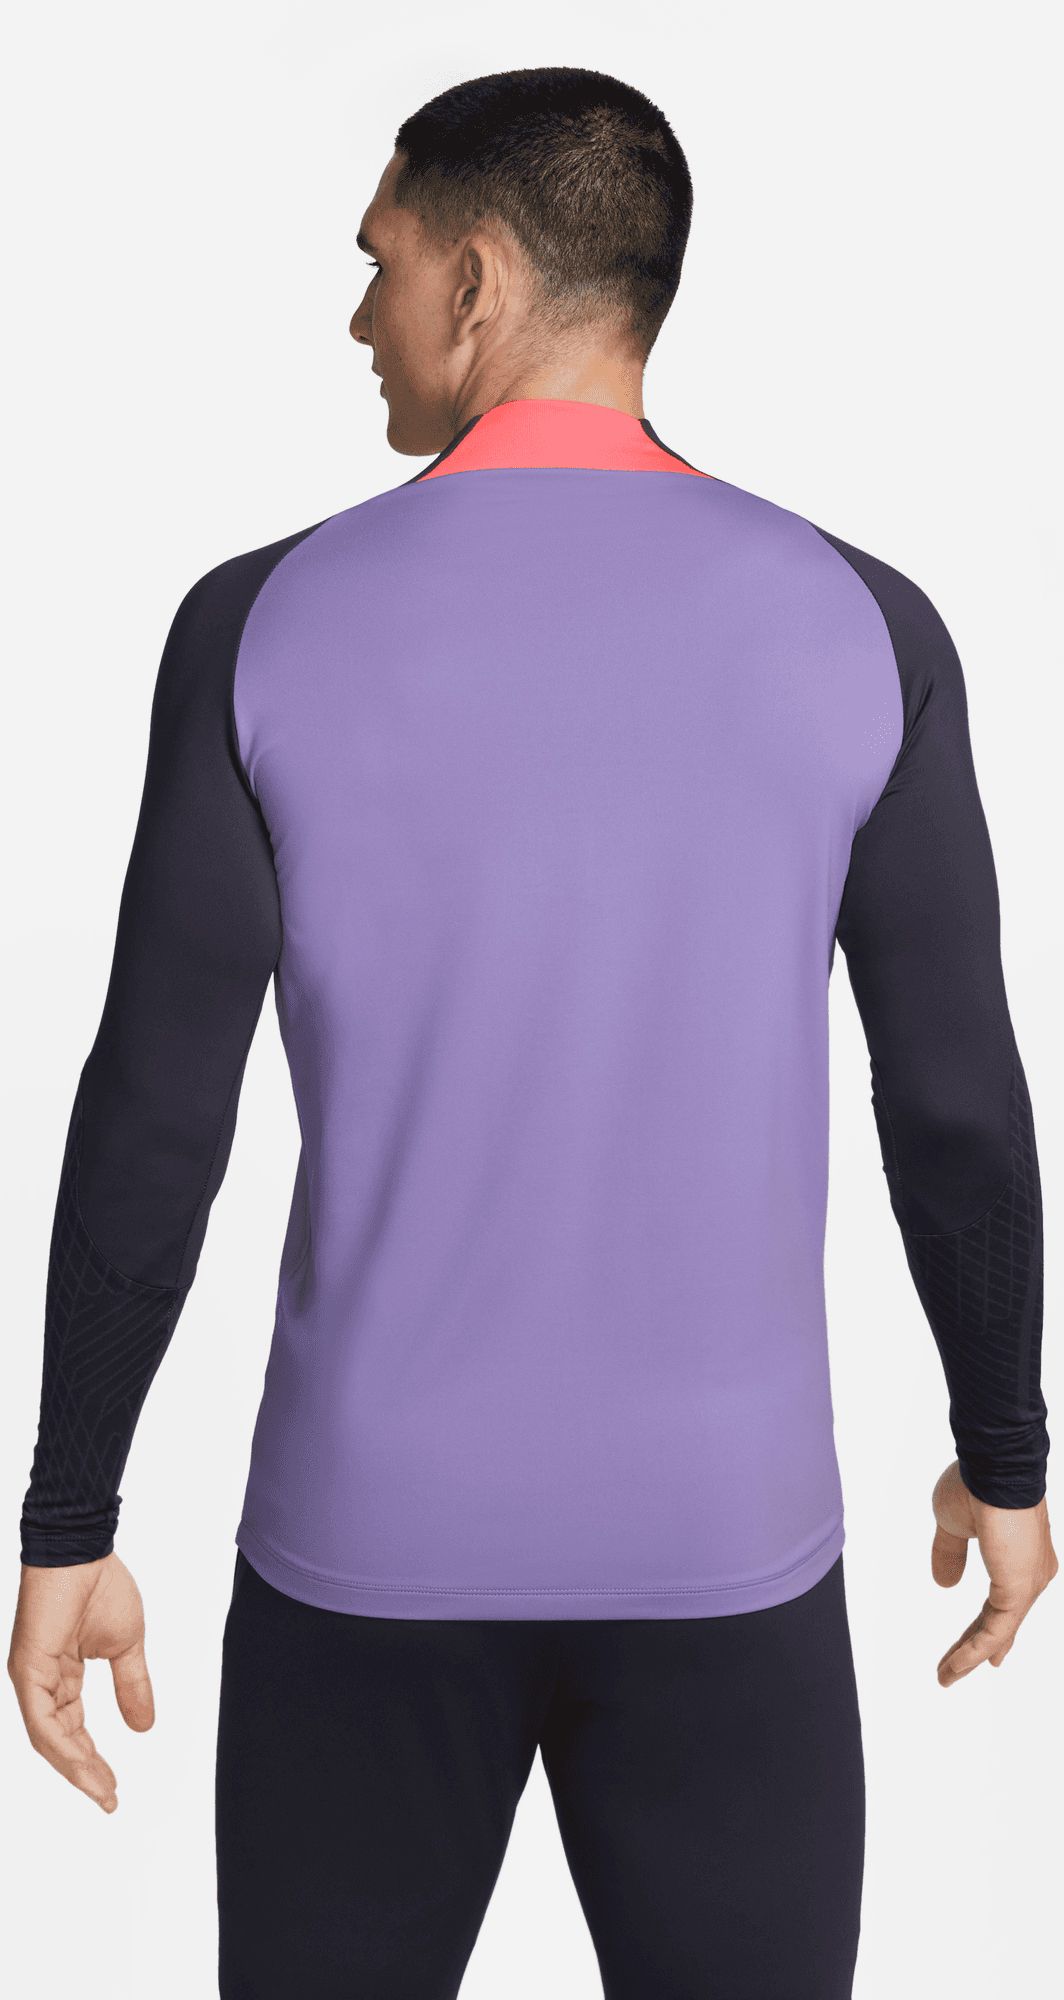 purple lfc shirt